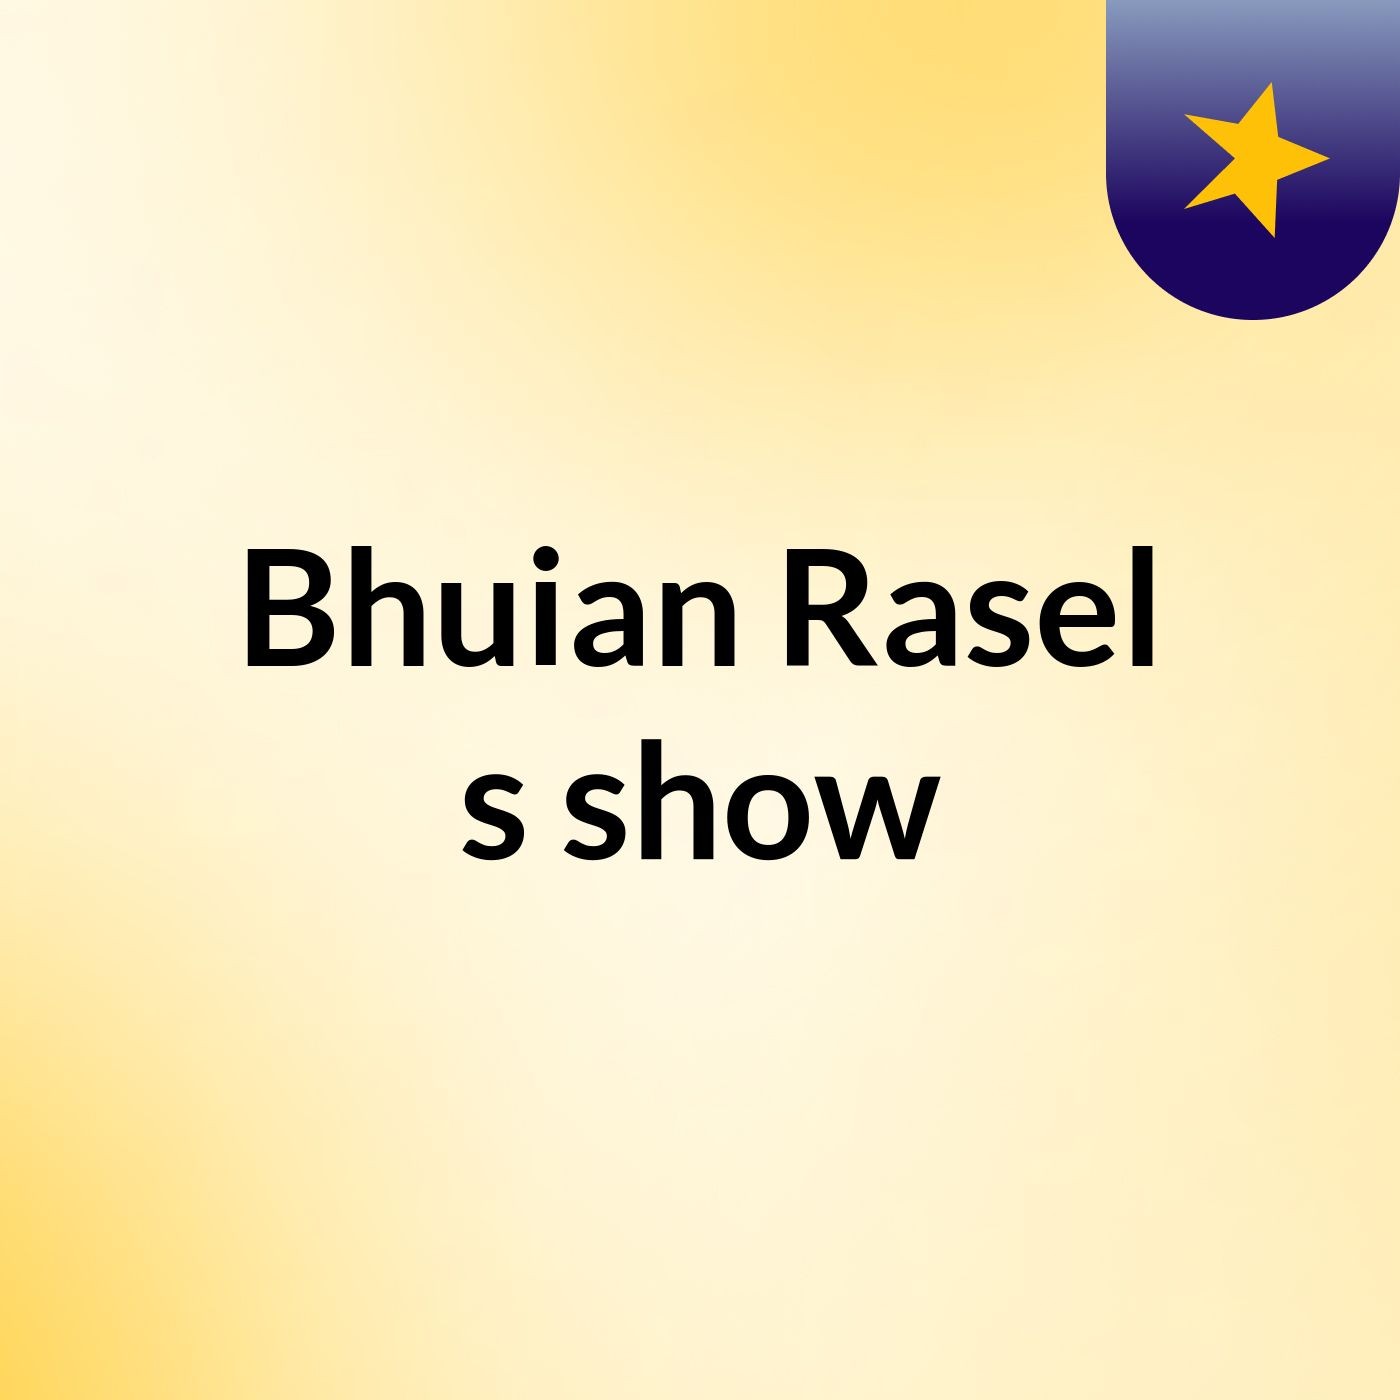 Episode 2 - Bhuian Rasel's show